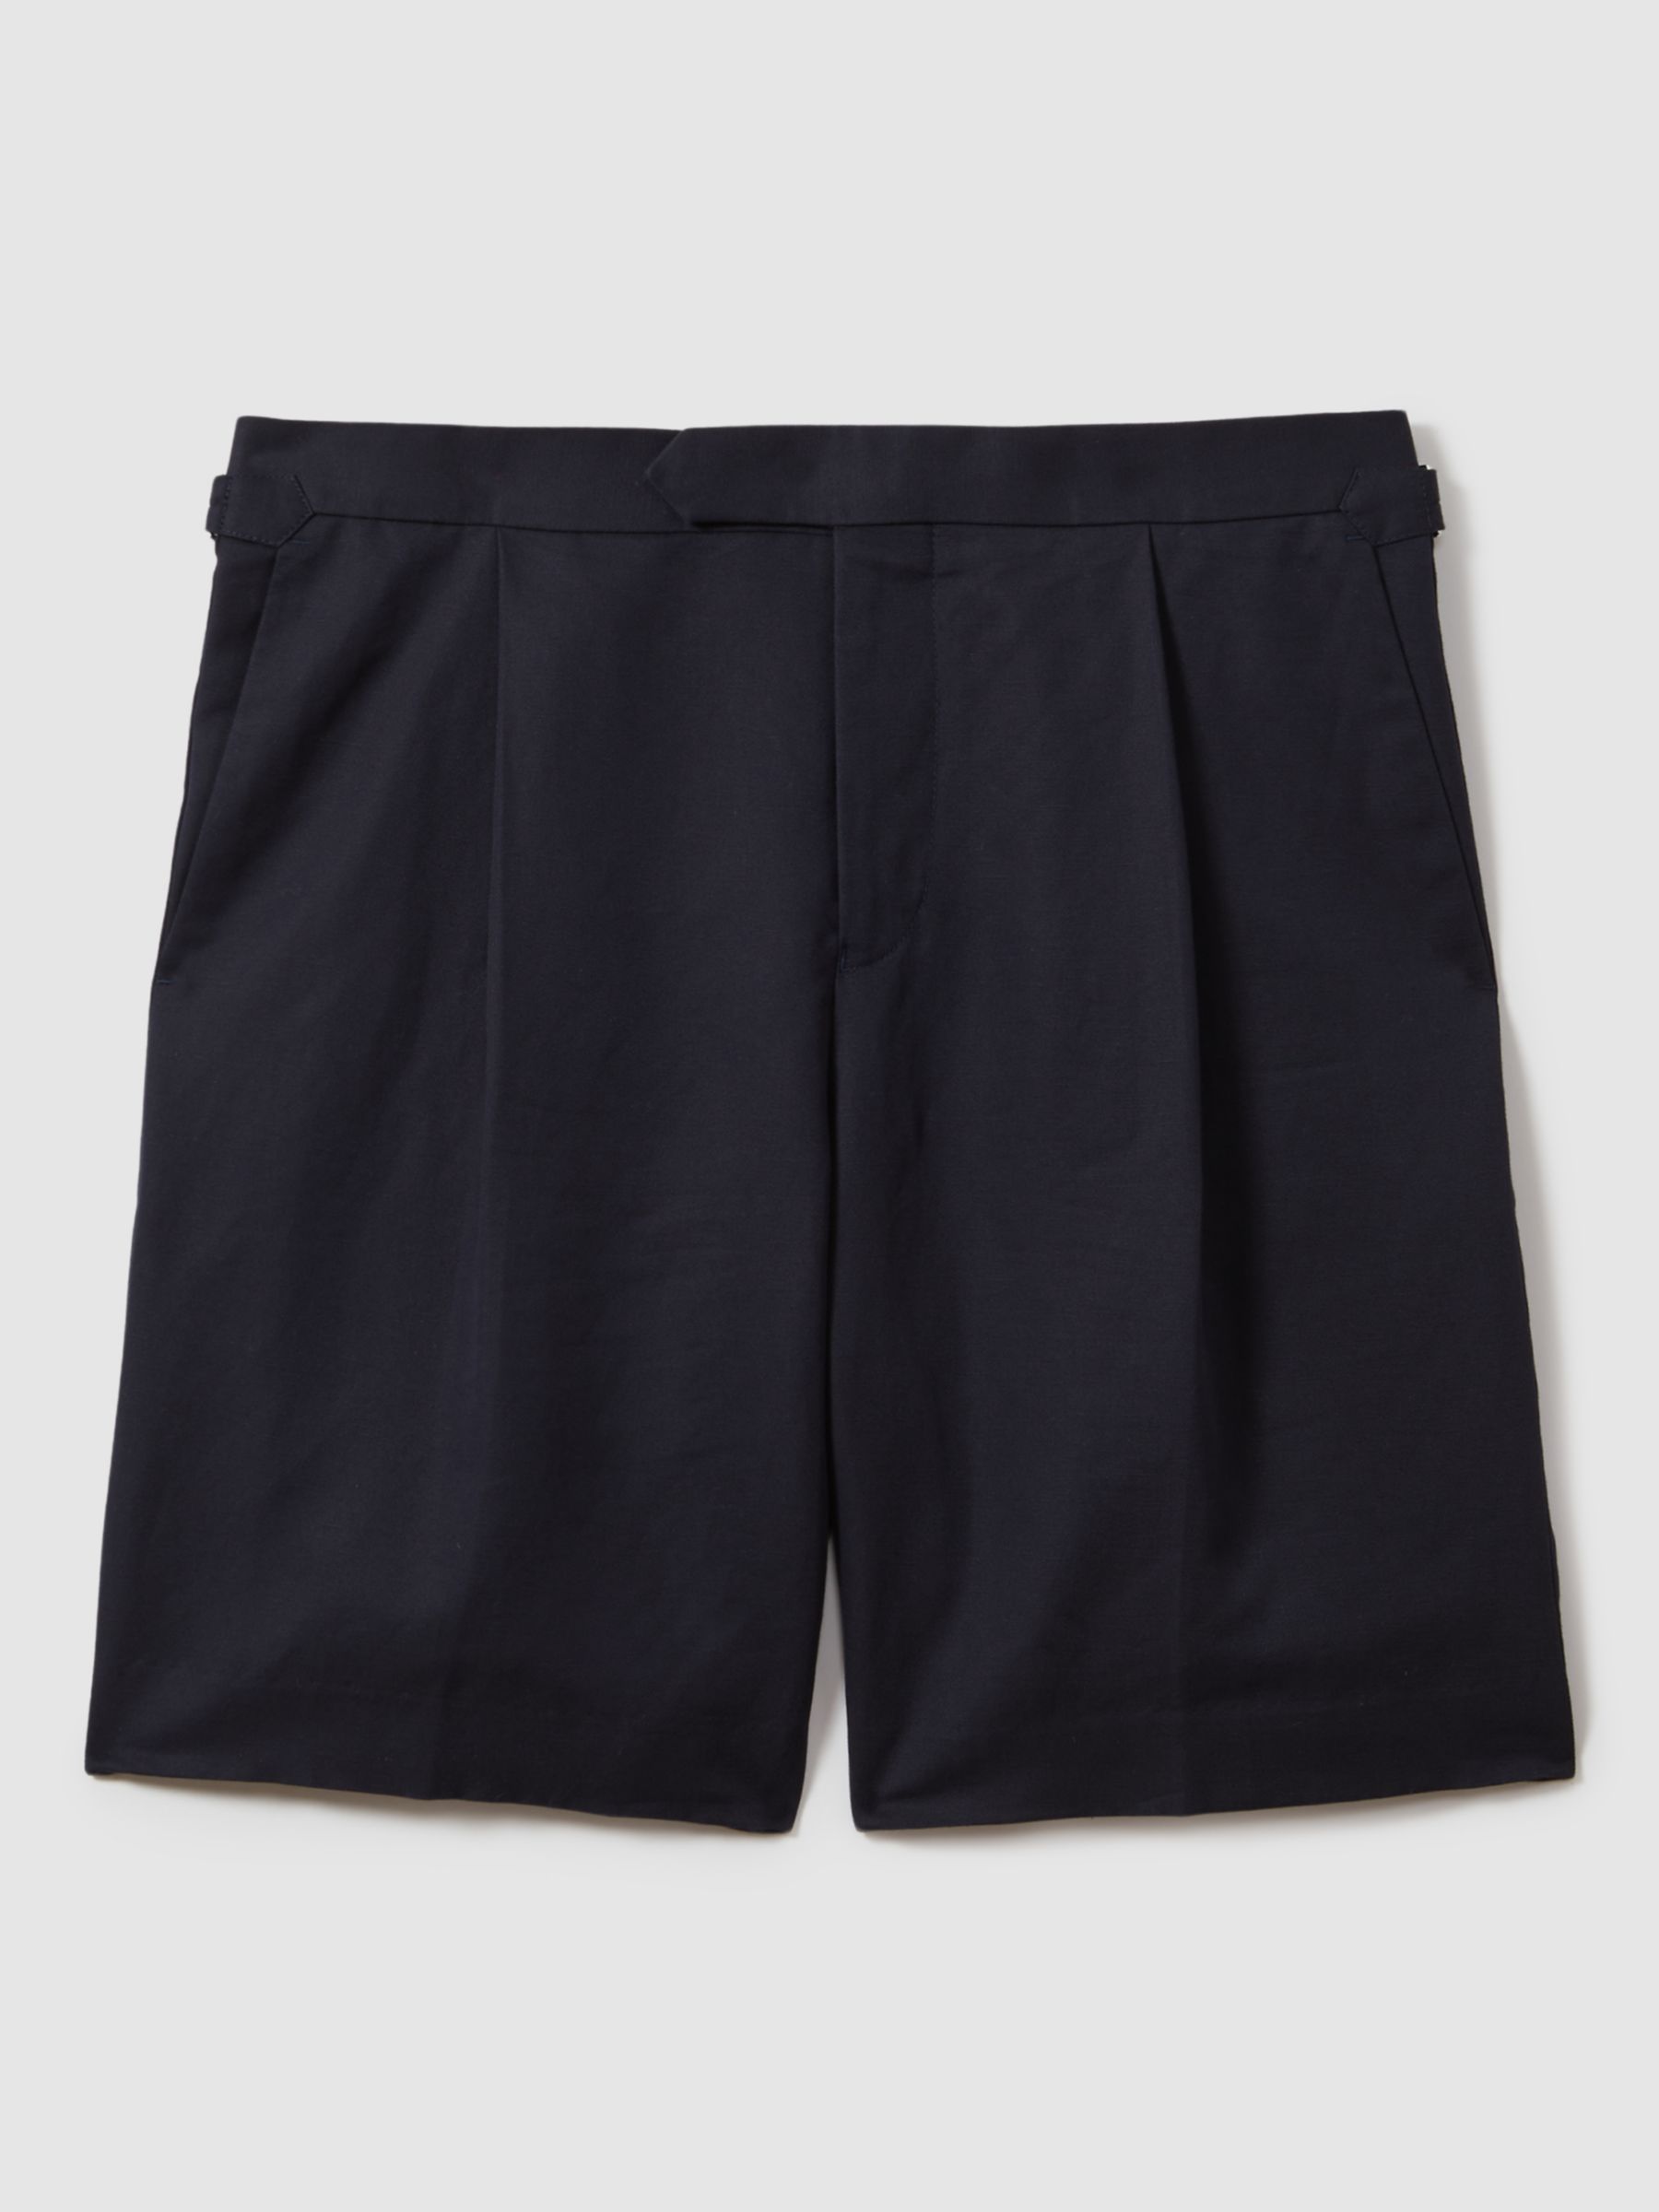 Reiss Con Linen Shorts, Navy, 28R